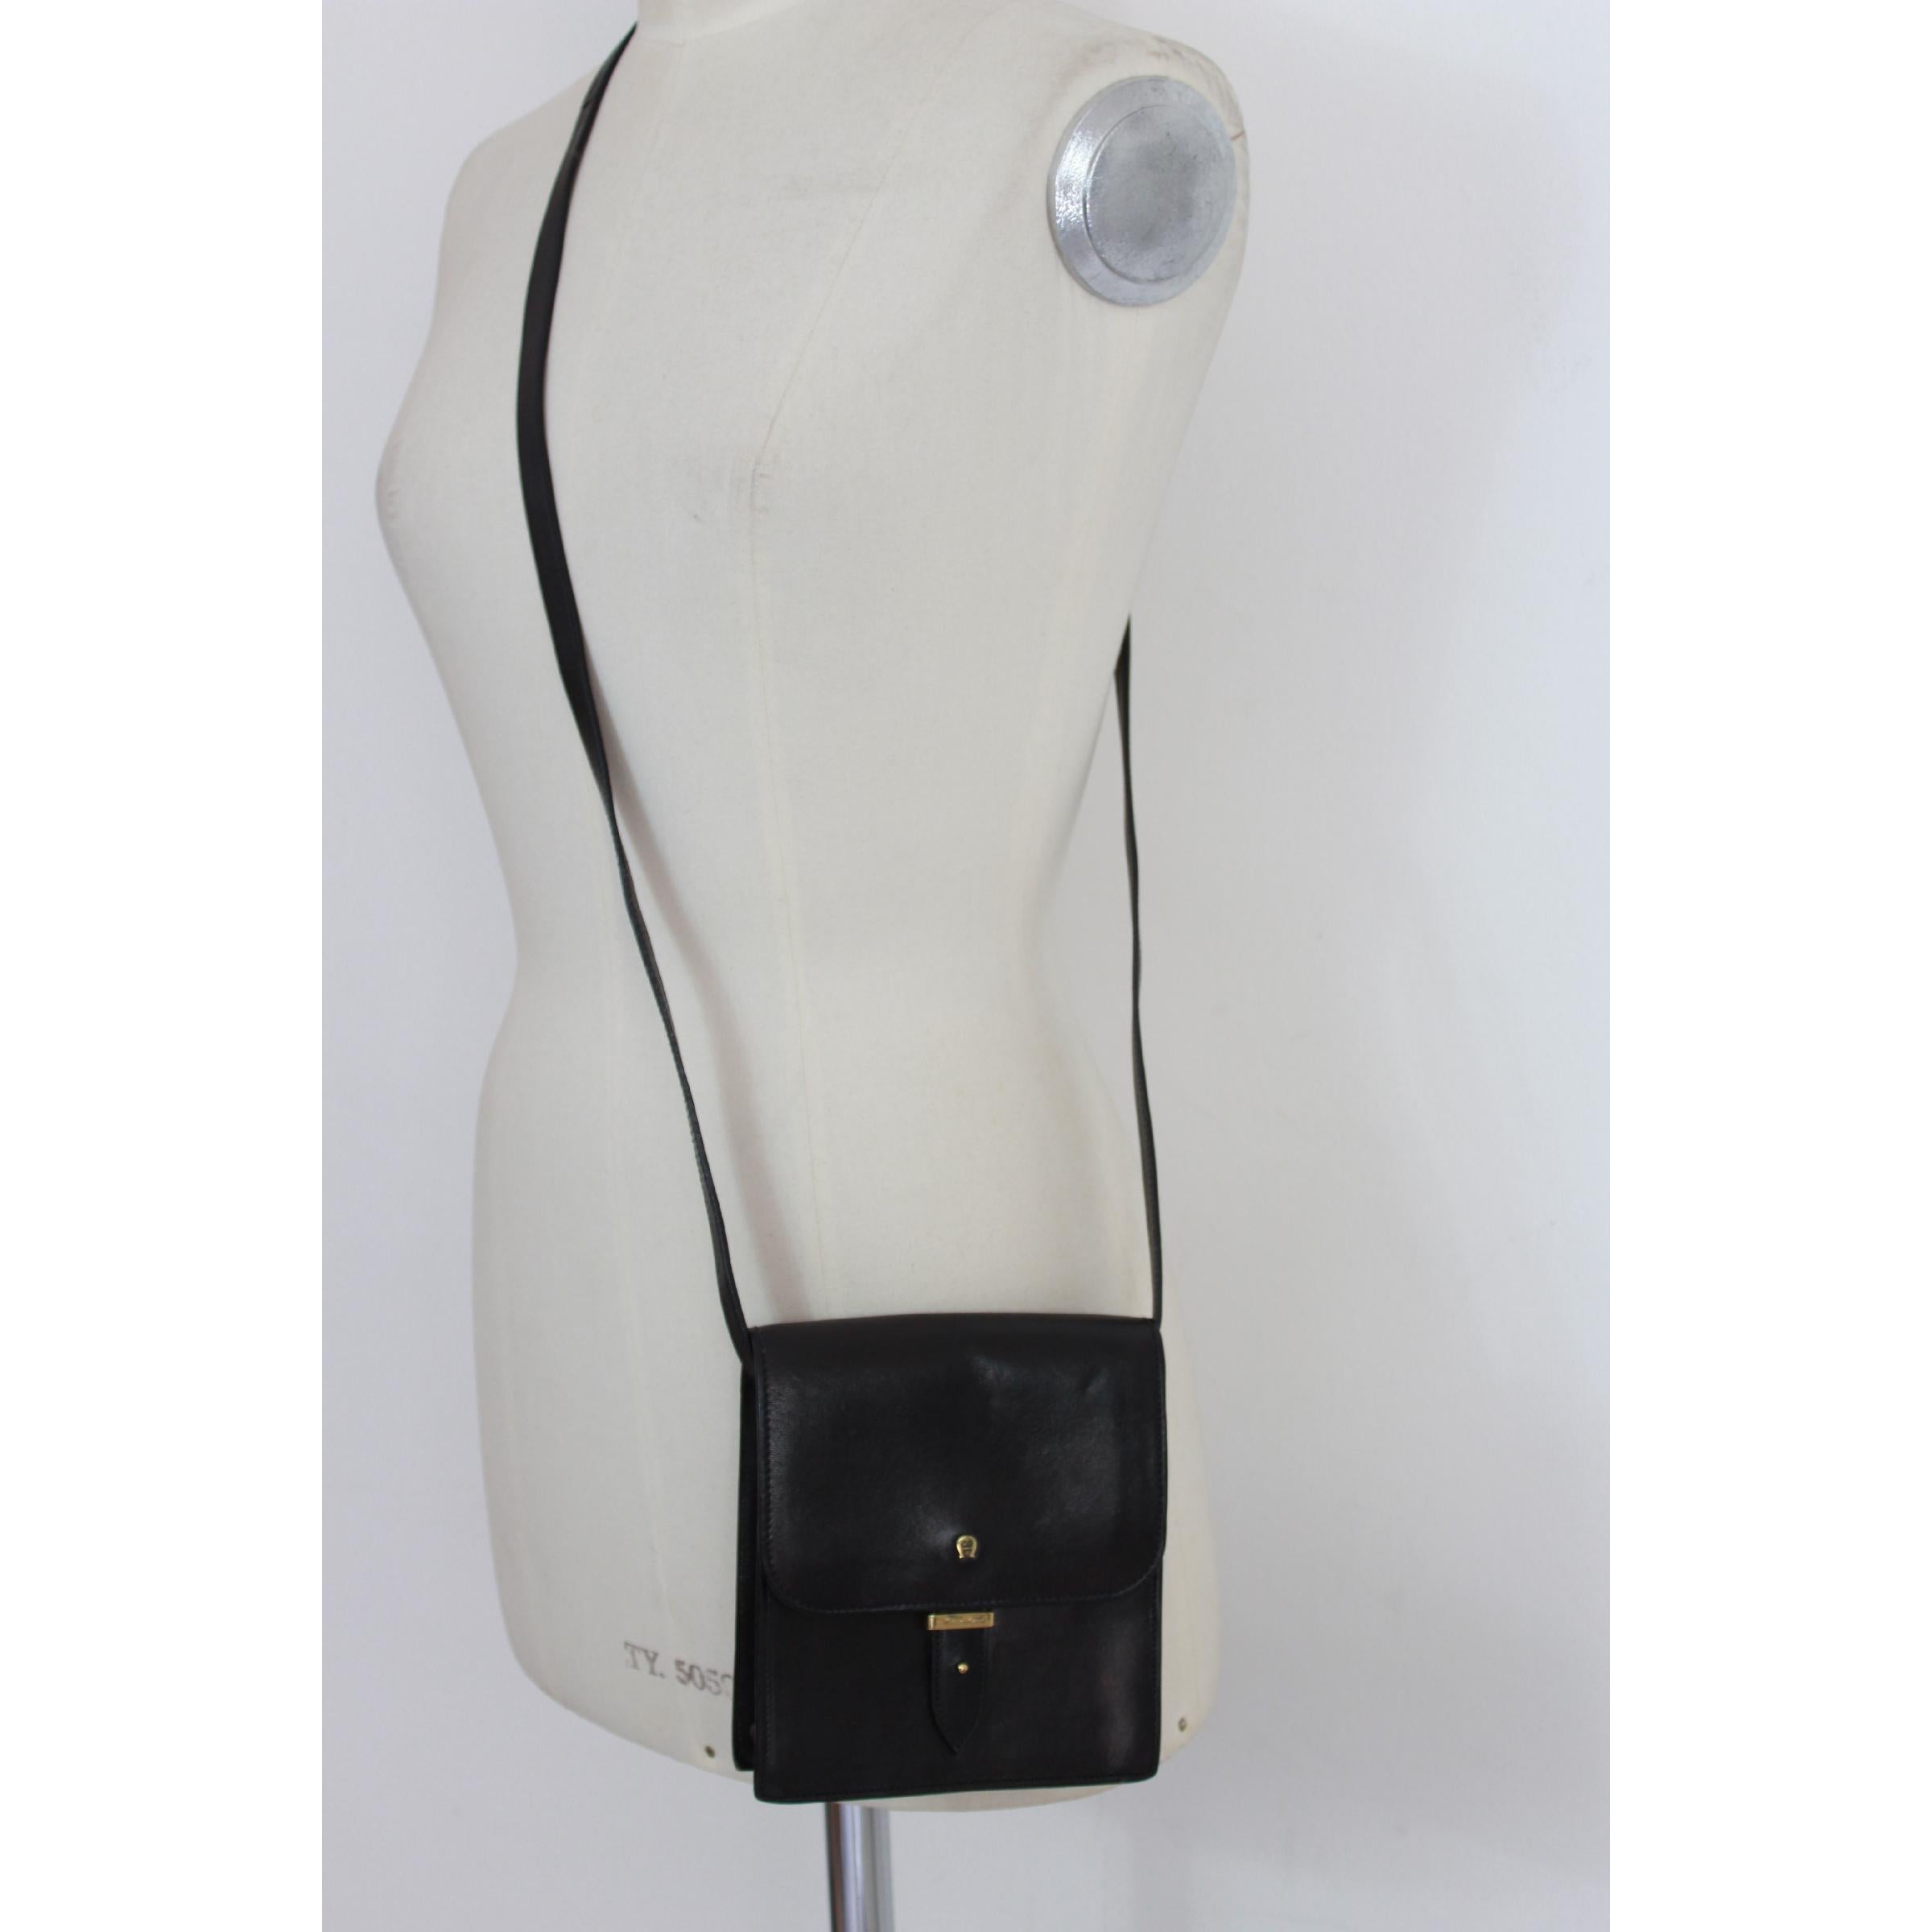 Vintage Etienne Aigner Handbags - 3 For Sale on 1stDibs